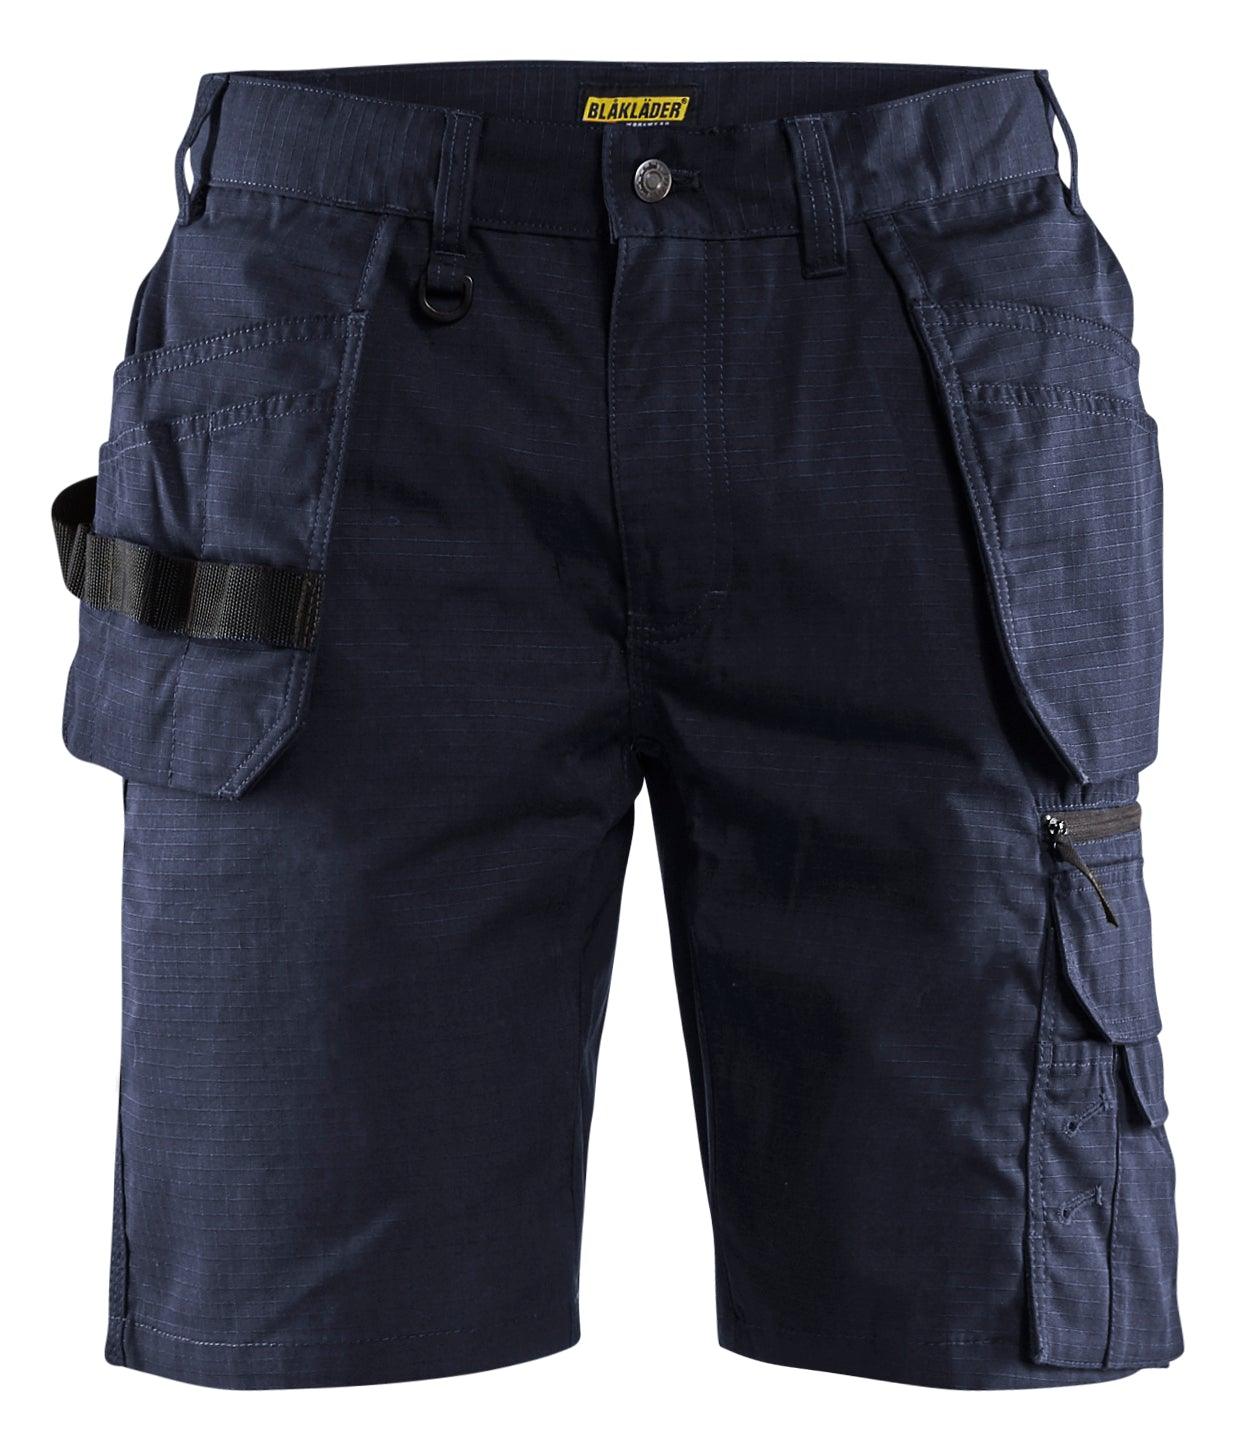 Blaklader 1637 7oz Rip Stop Shorts with Utility Pockets - Dark Navy - Trusted Gear Company LLC